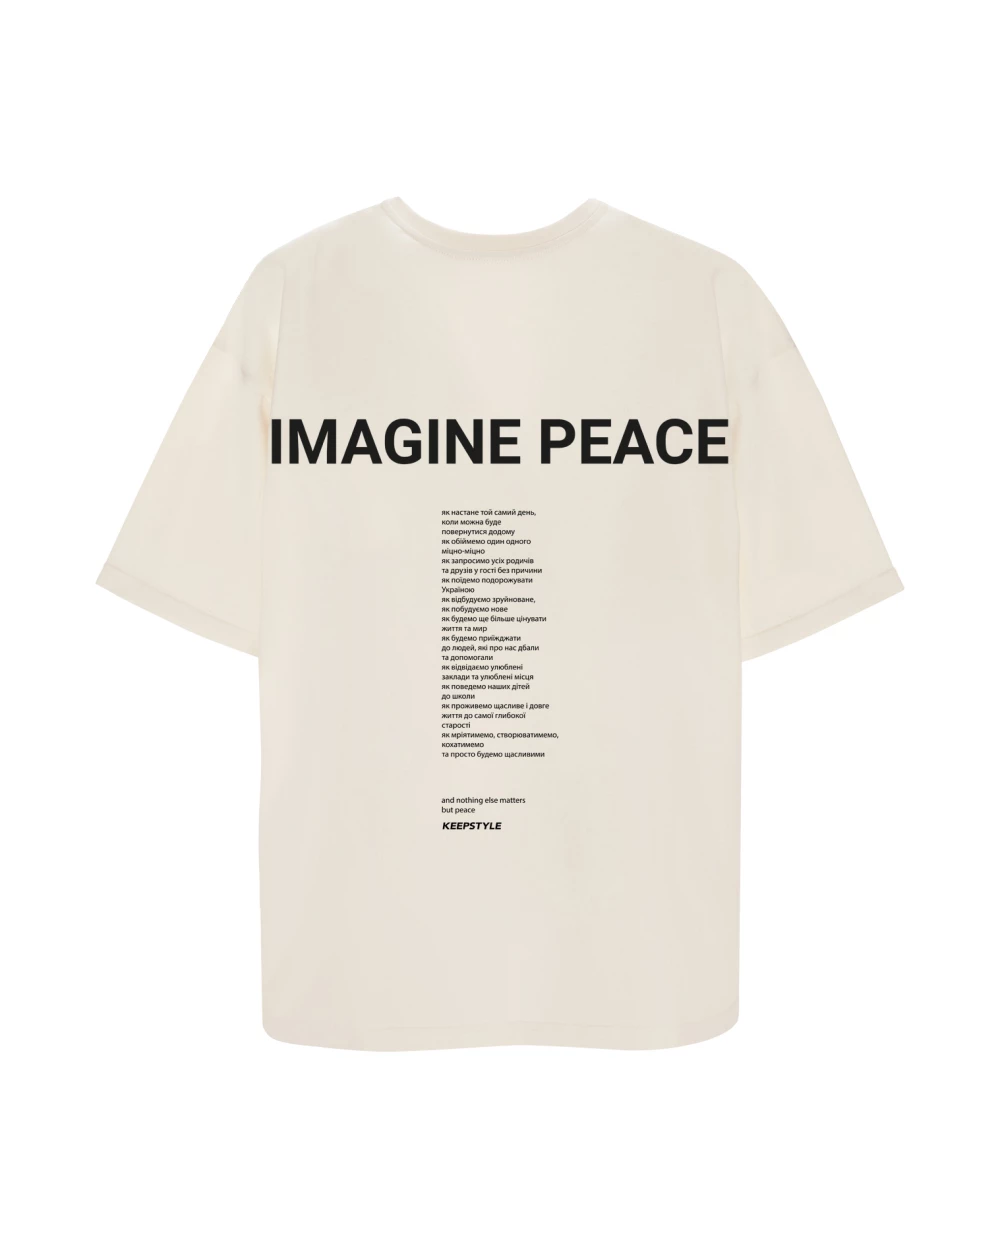 imagine peace t-shirt in vanilla color